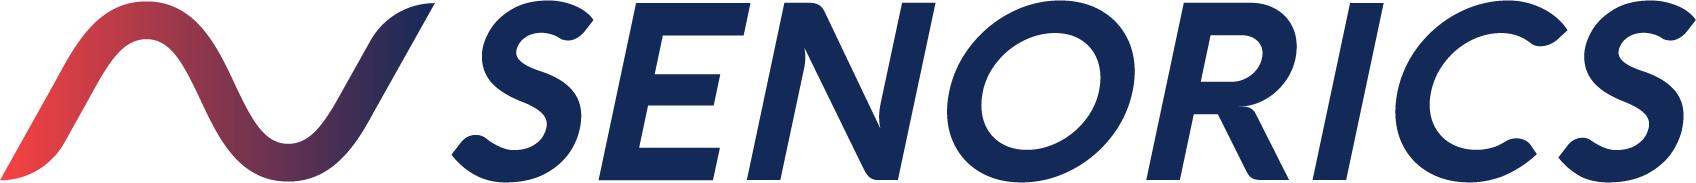 Senorics_Logo